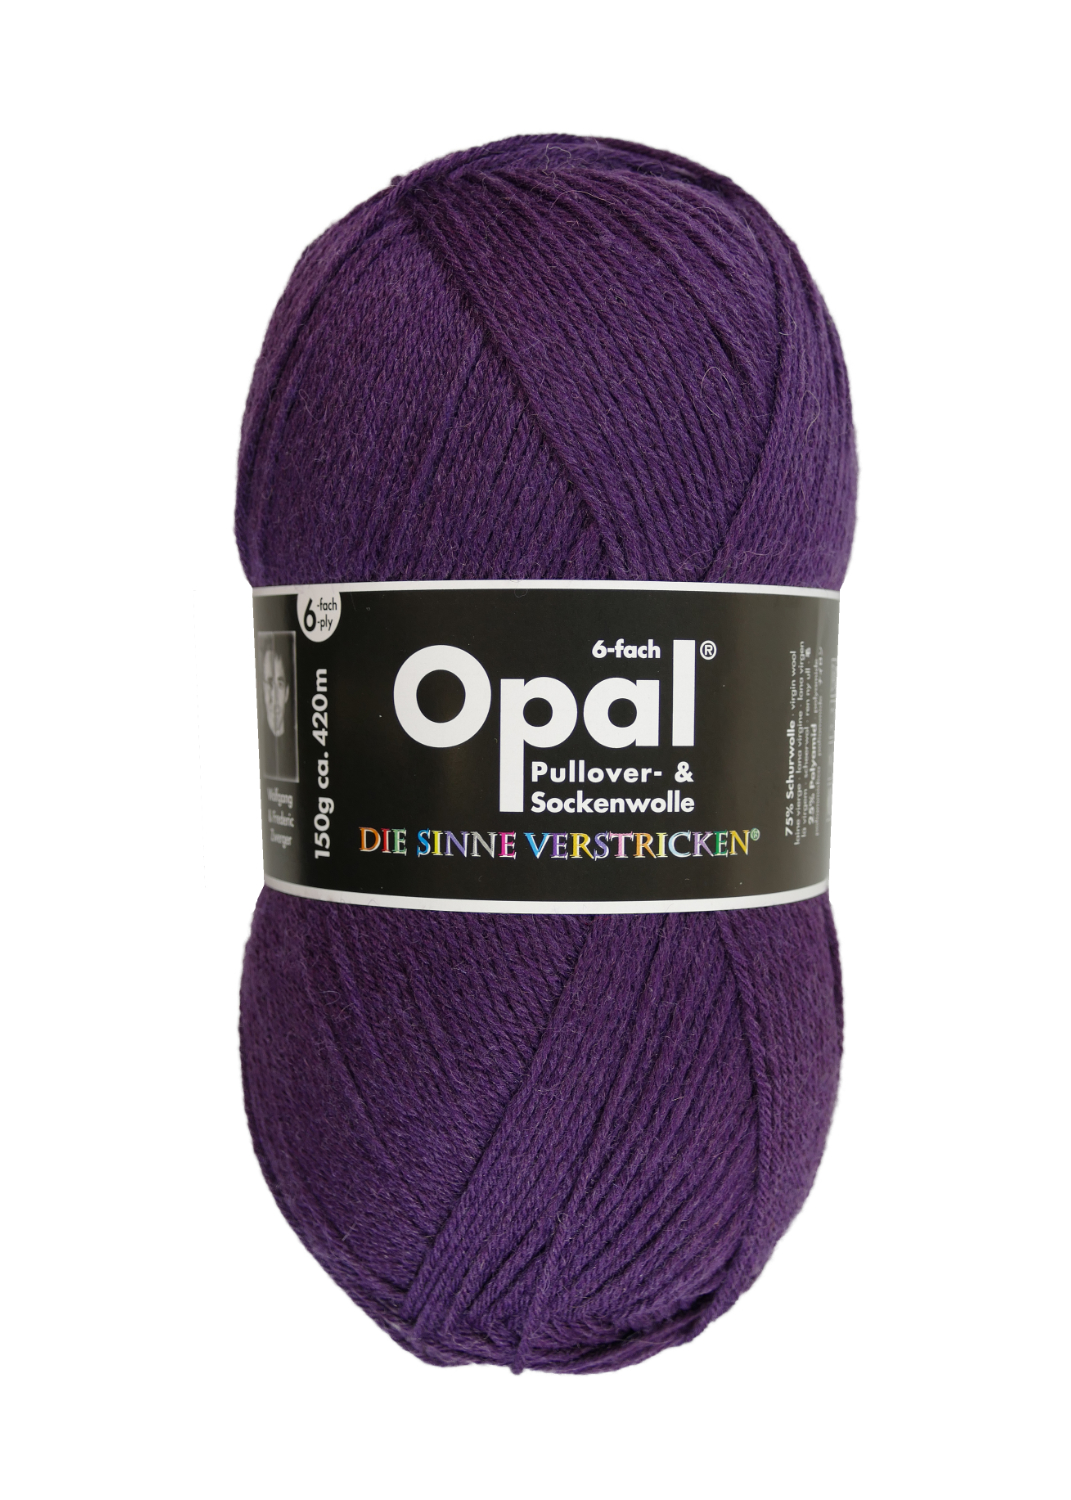 OPAL Uni - 6-fach Sockenwolle 7902 - violett